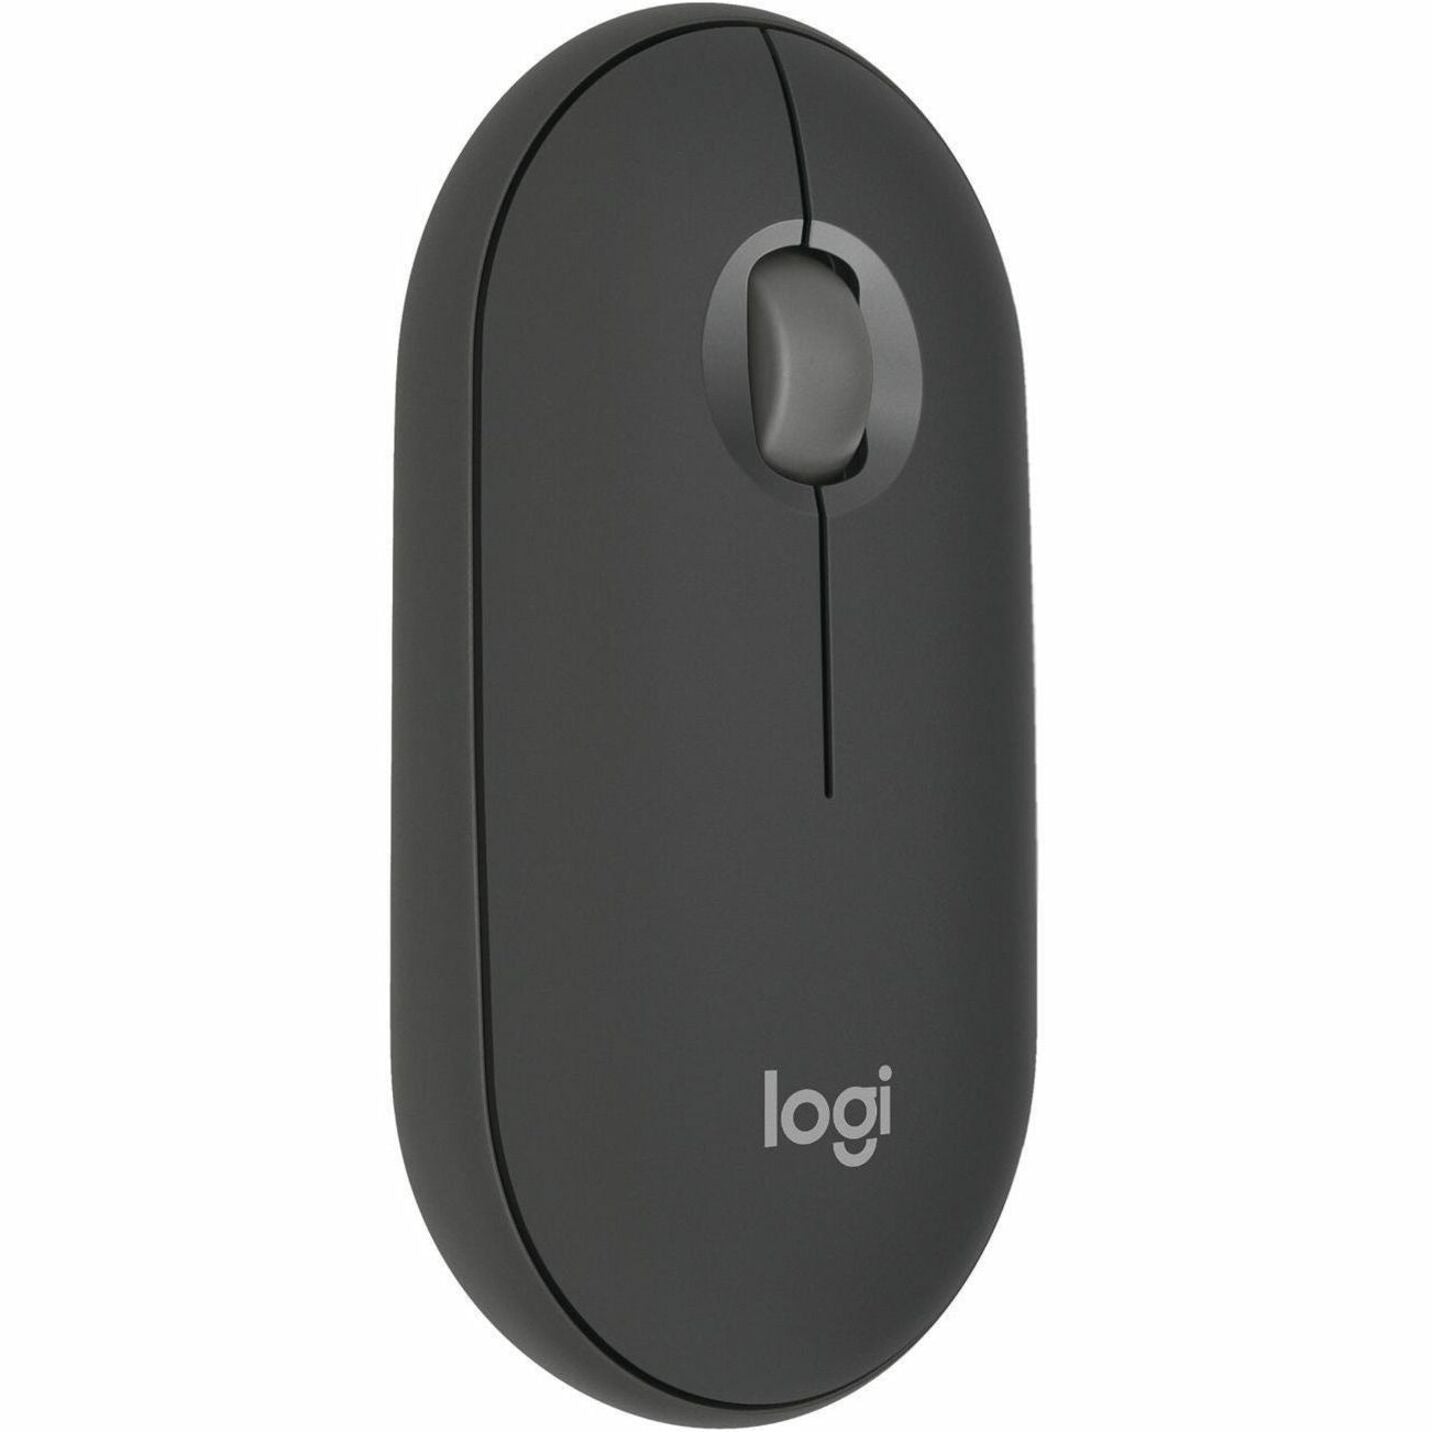 Logitech 910-007024 Pebble 2 M350s Mouse, Tonal Graphite, Bluetooth Wireless, 4000 dpi